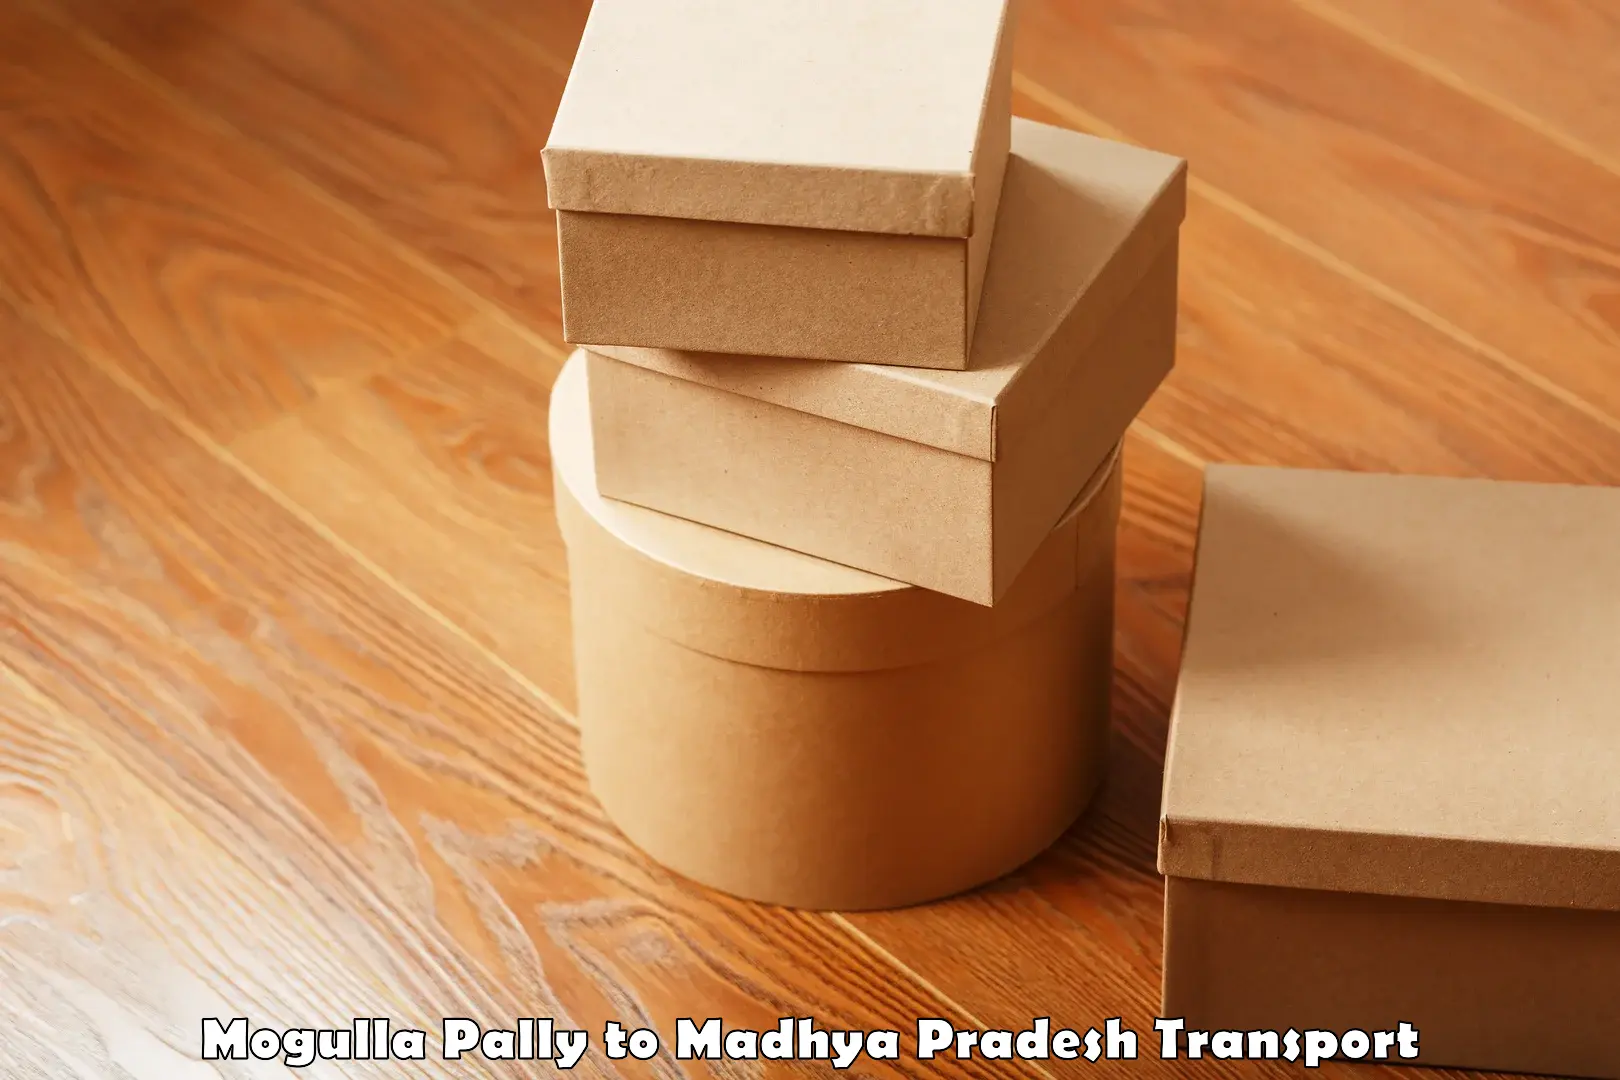 Delivery service Mogulla Pally to Madhya Pradesh